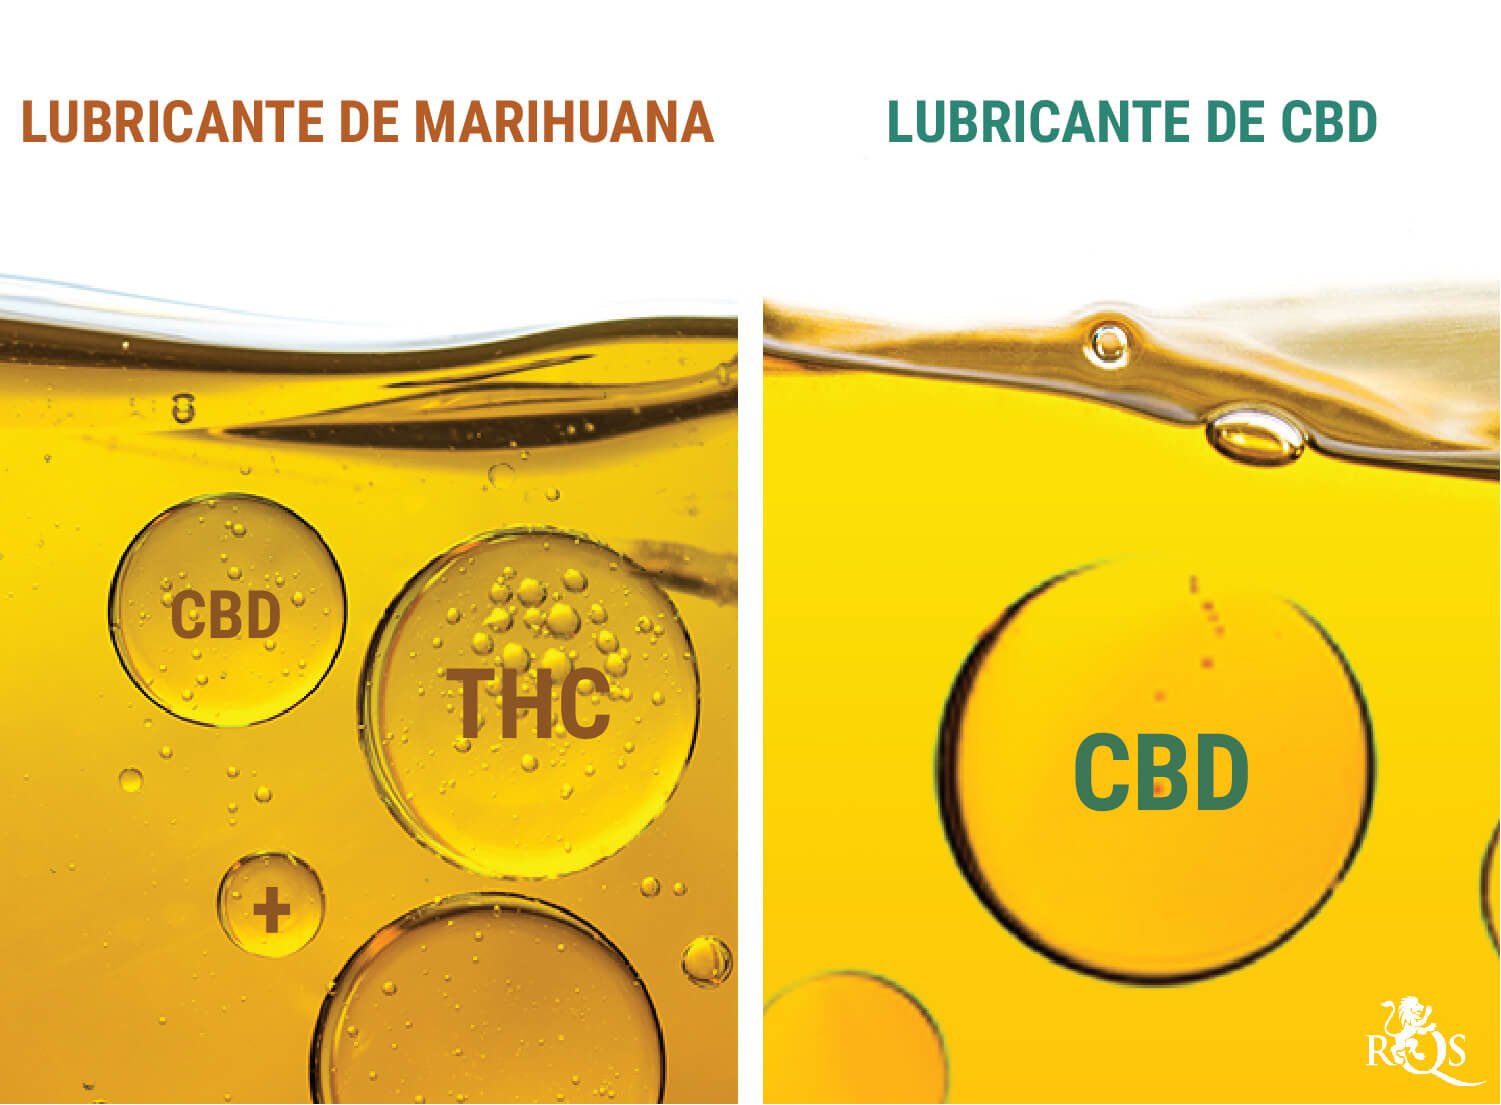 Lubricante de marihuana vs lubricante de CBD